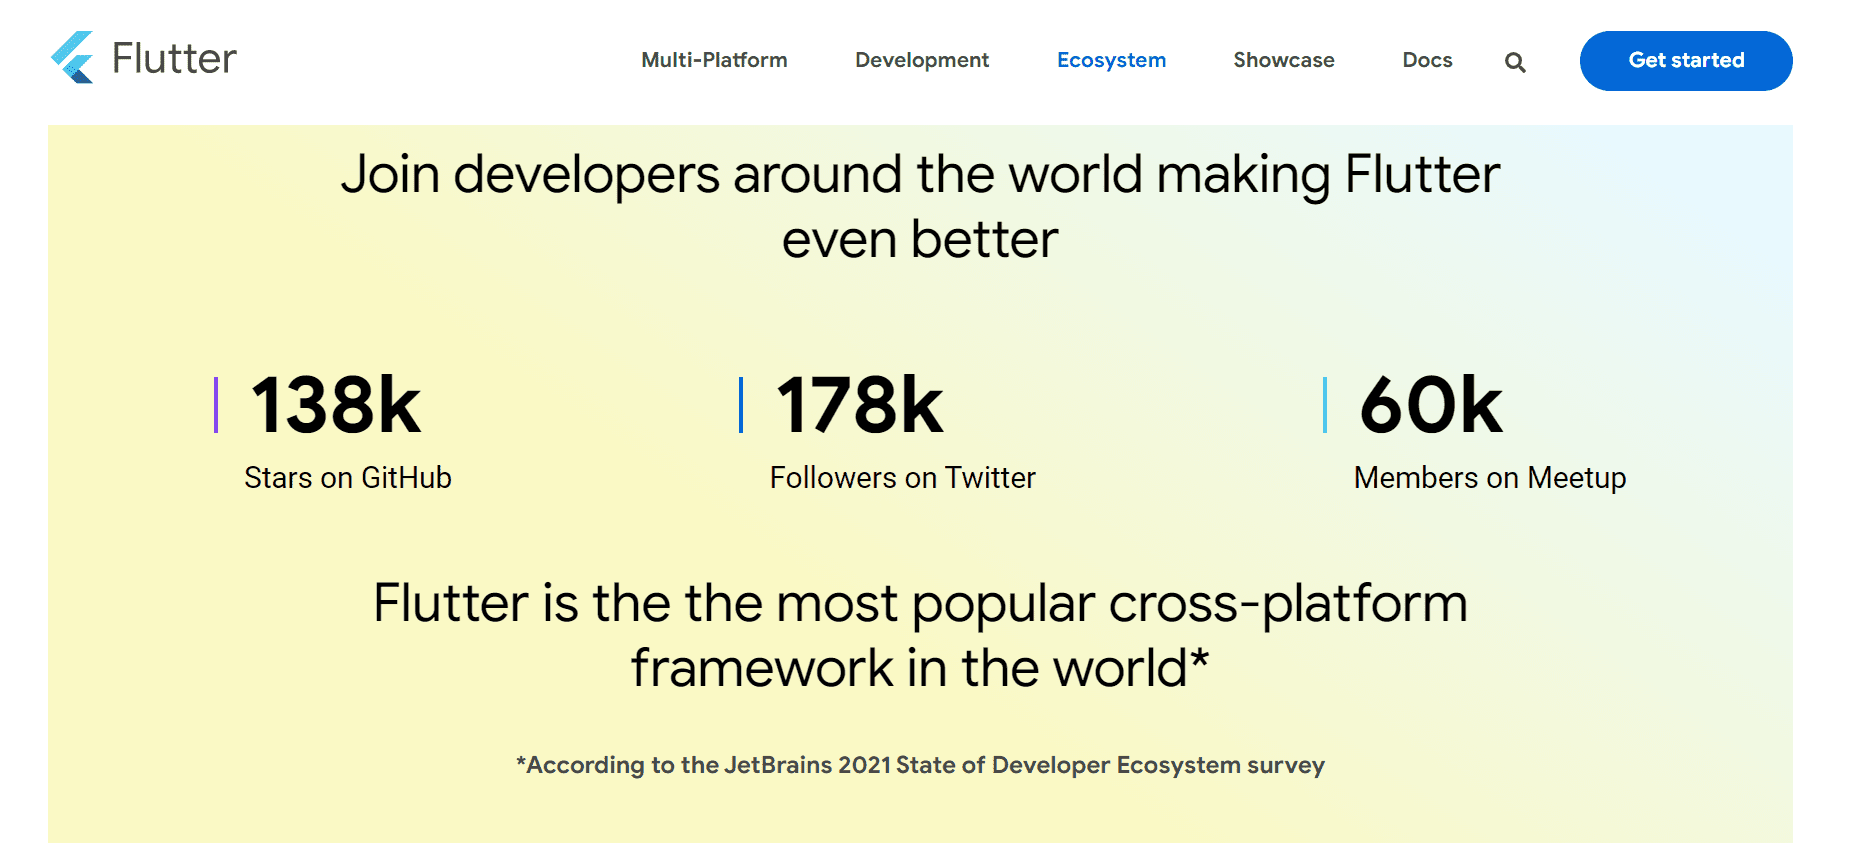 Flutter's community of developers 